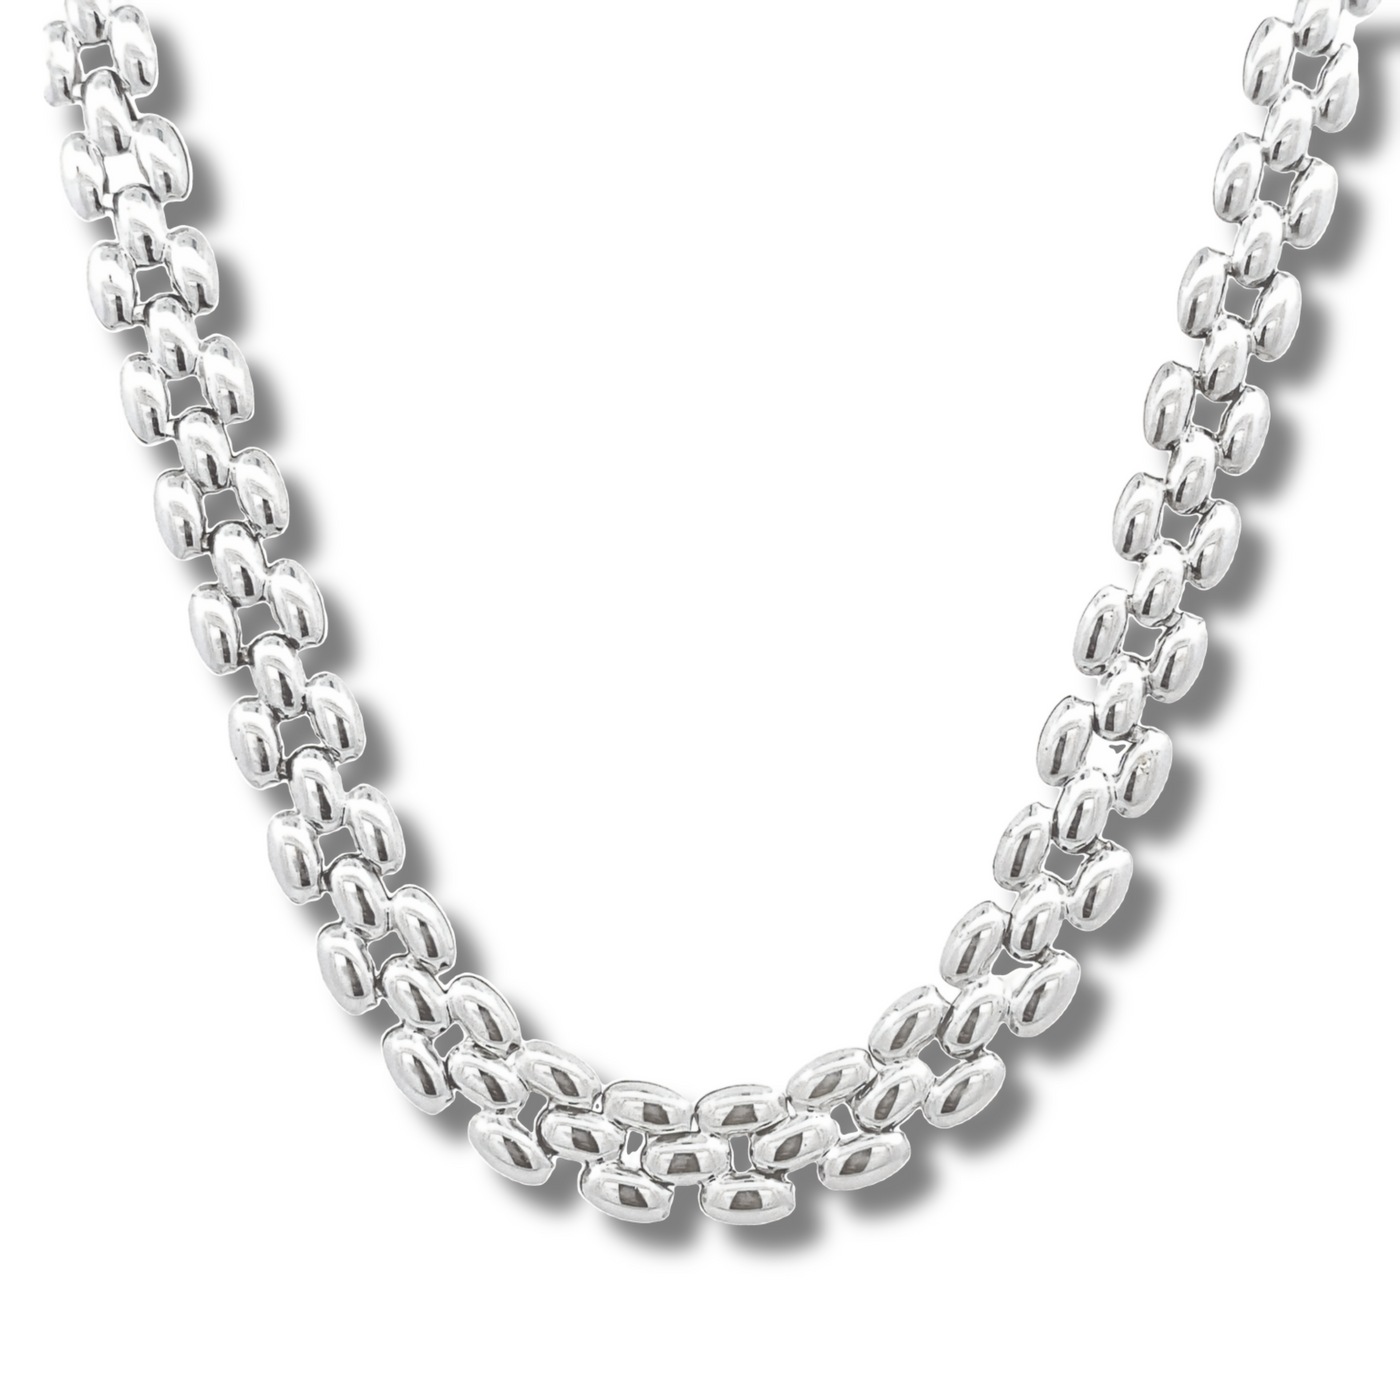 10 Karat White Gold Wide Link Necklace